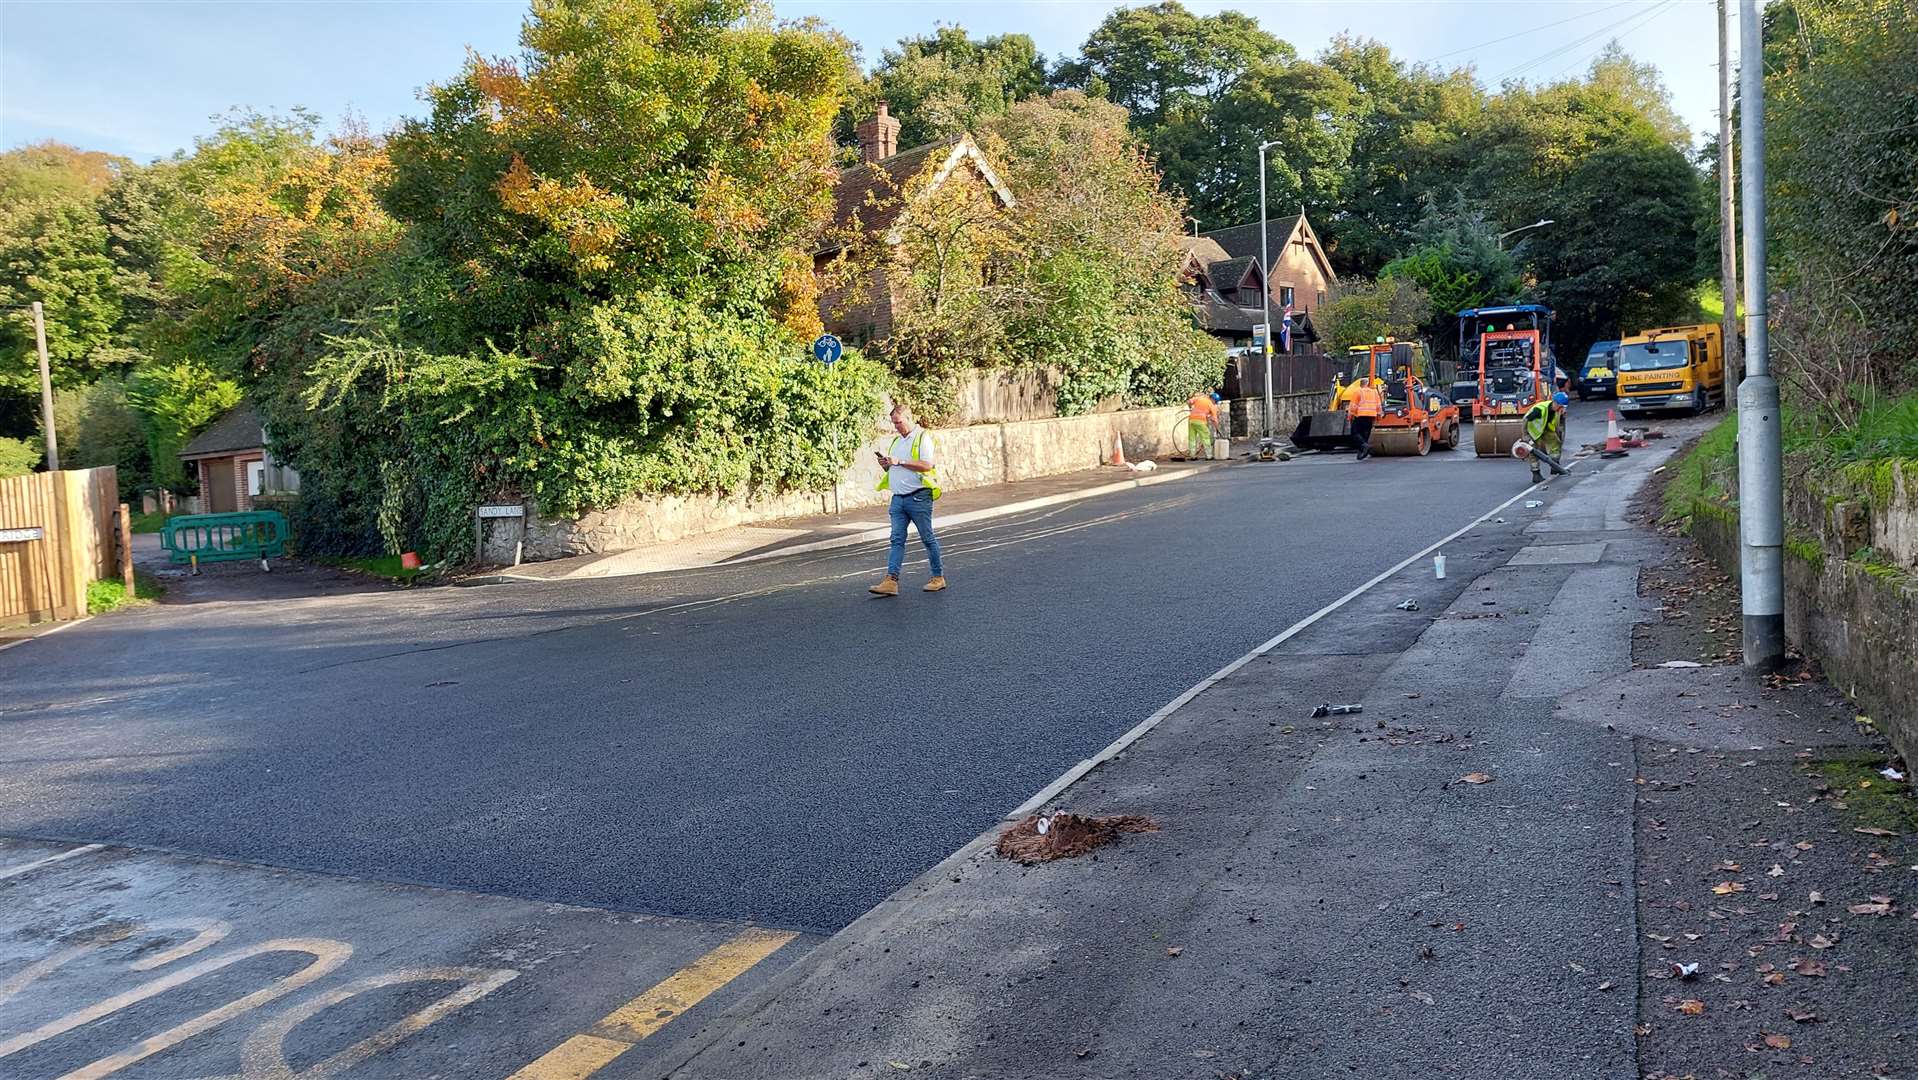 Kennington Road has now been resurfaced